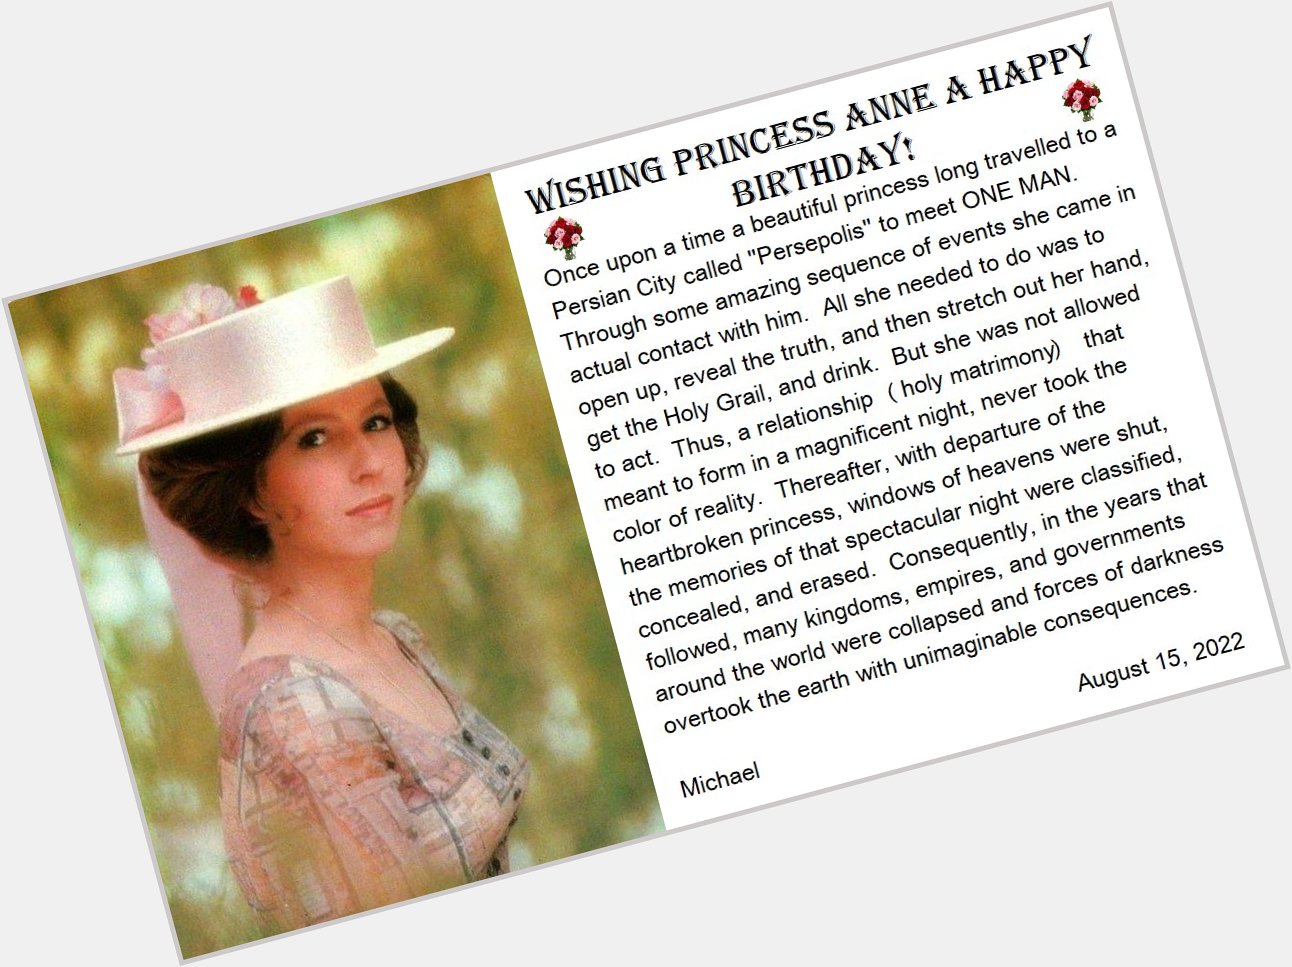  Wishing Princess Anne a Very Happy Birthday!

 